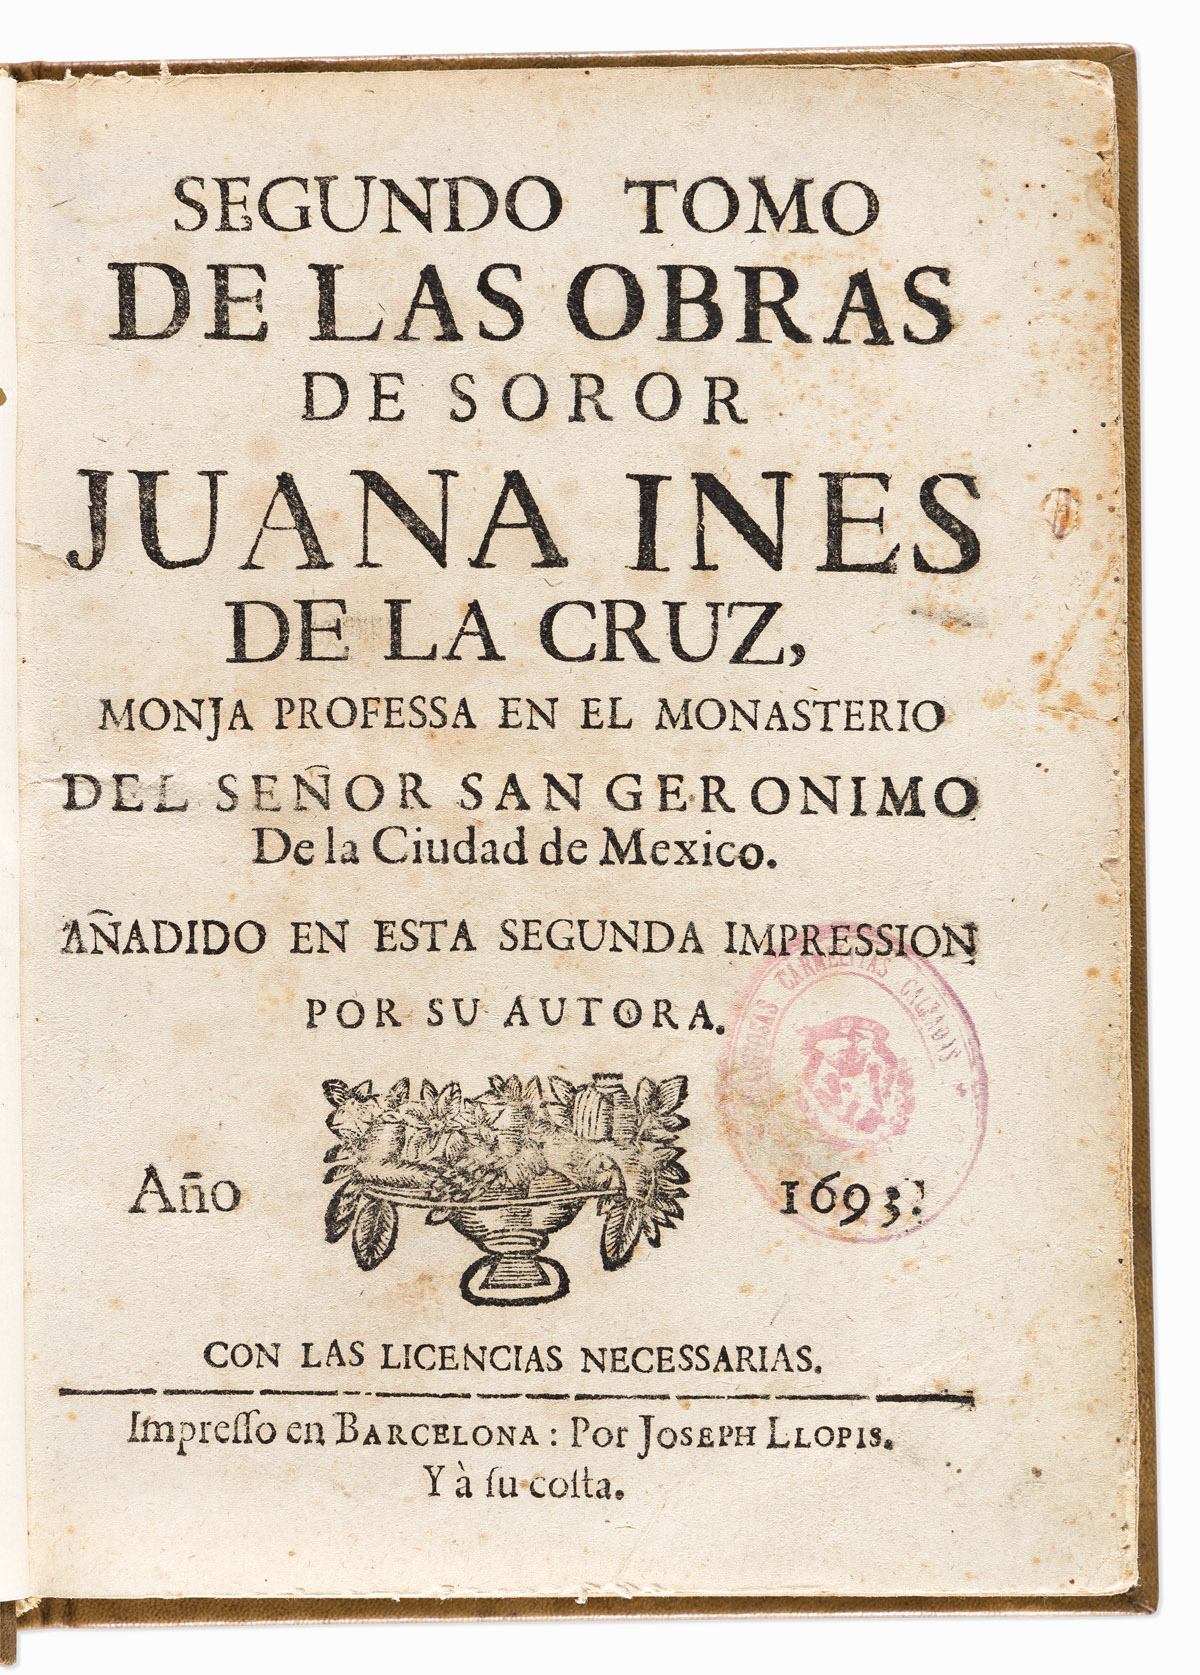 (MEXICAN LITERATURE.) Juana Inés de la Cruz. Complete set of her collected works.